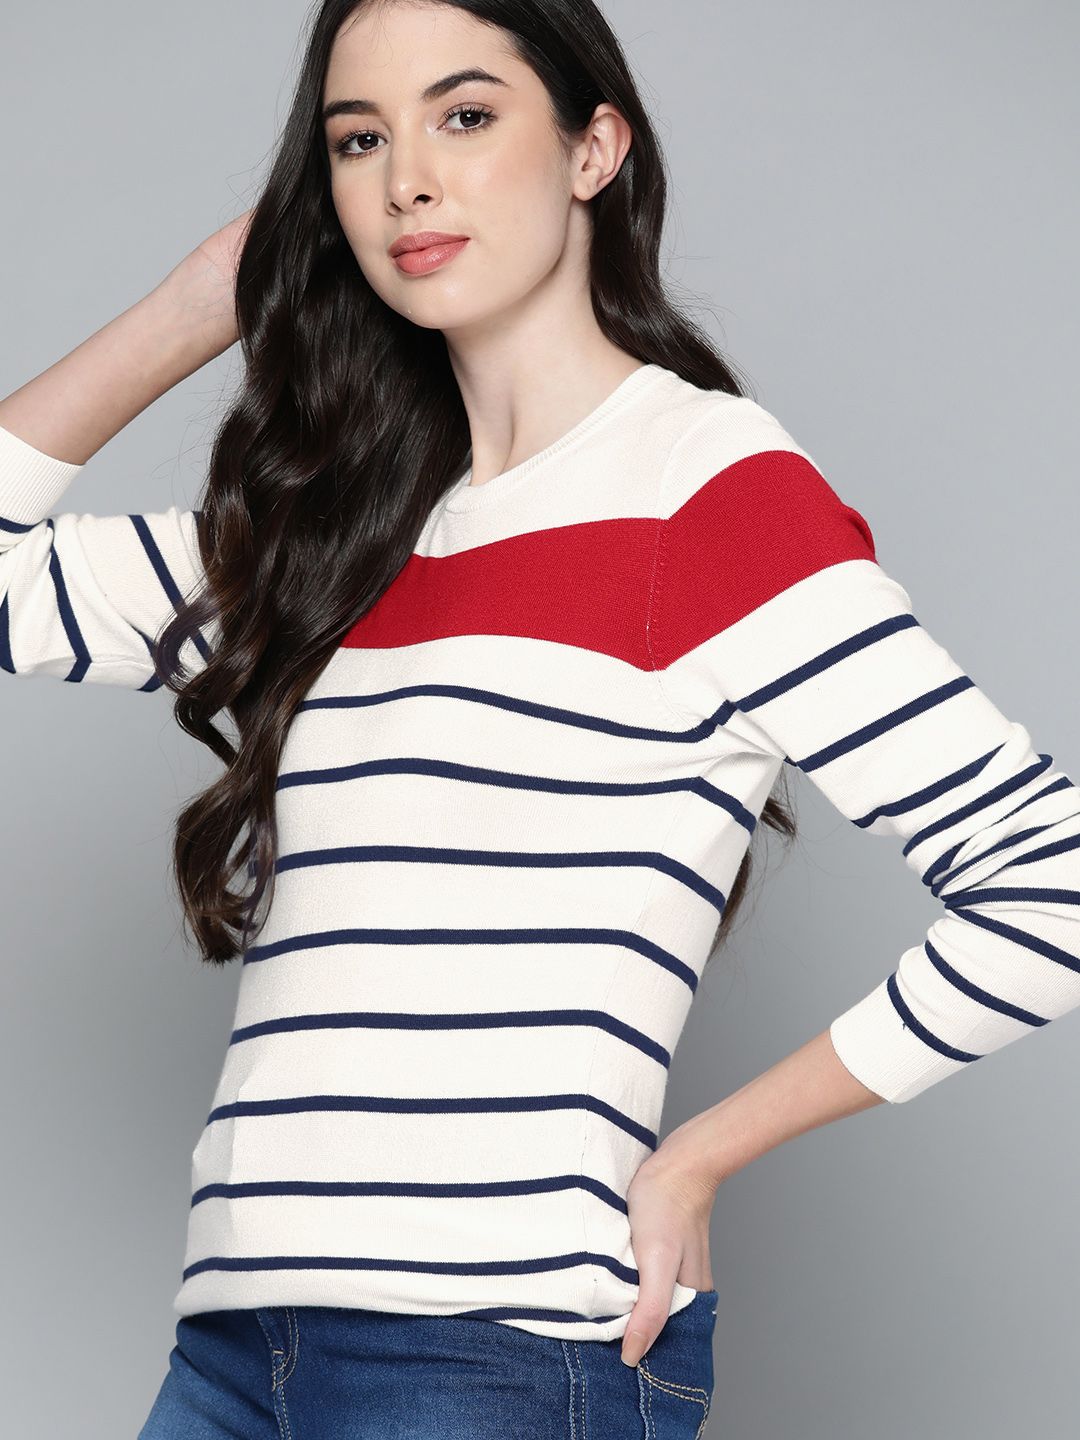 Harvard Women White & Navy Blue Striped Pullover Price in India